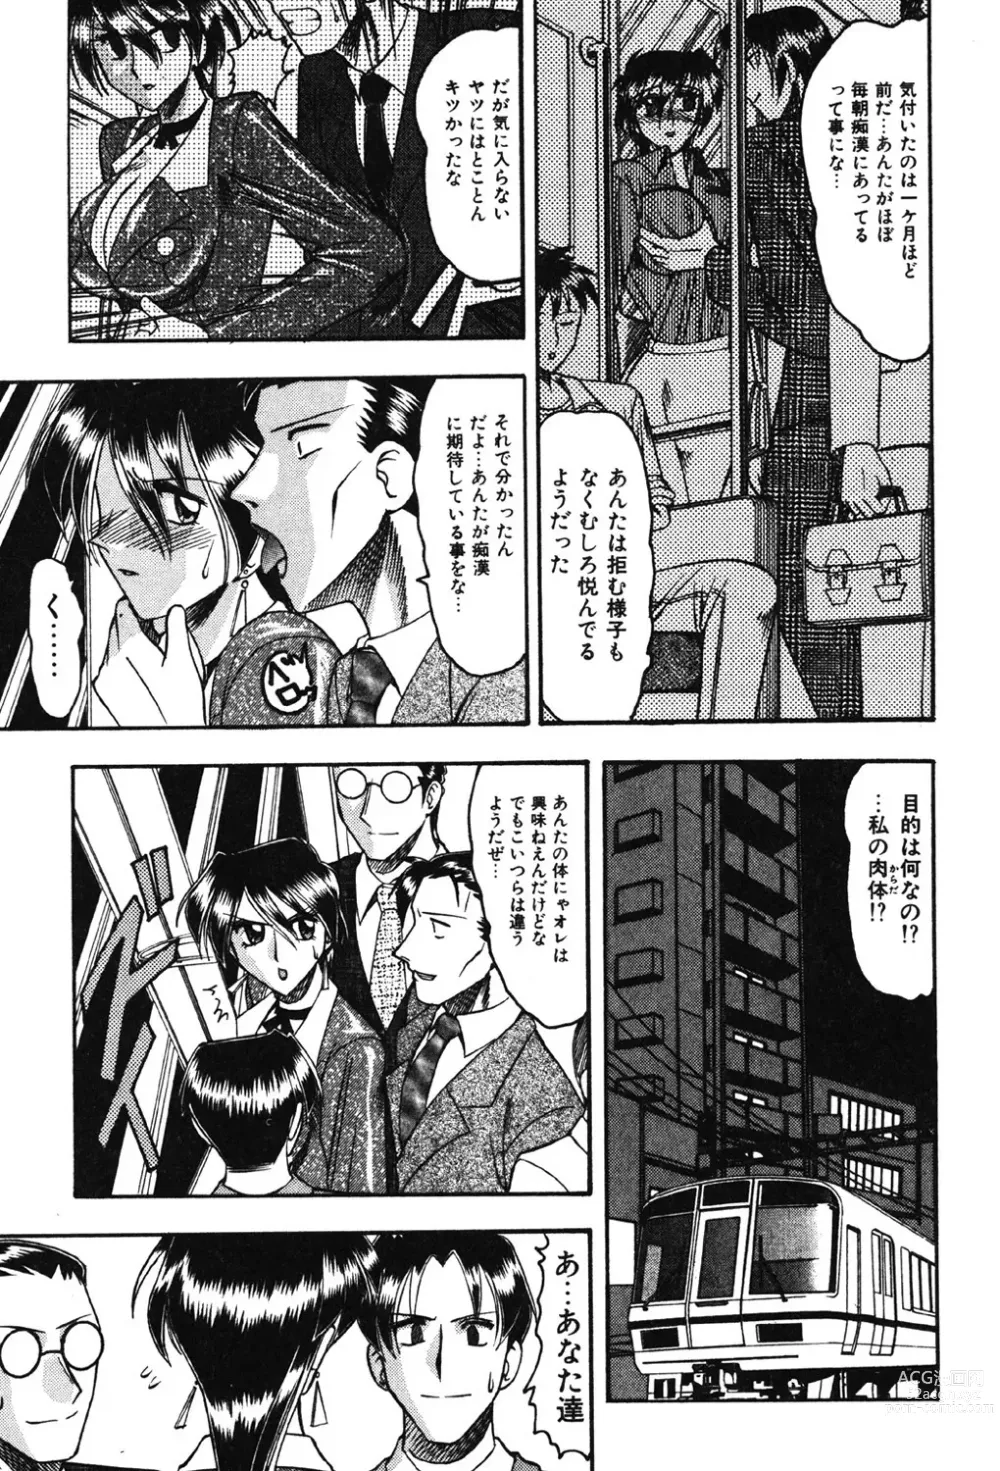 Page 12 of manga Hahaoya Ga Onna Ni Naru Toki